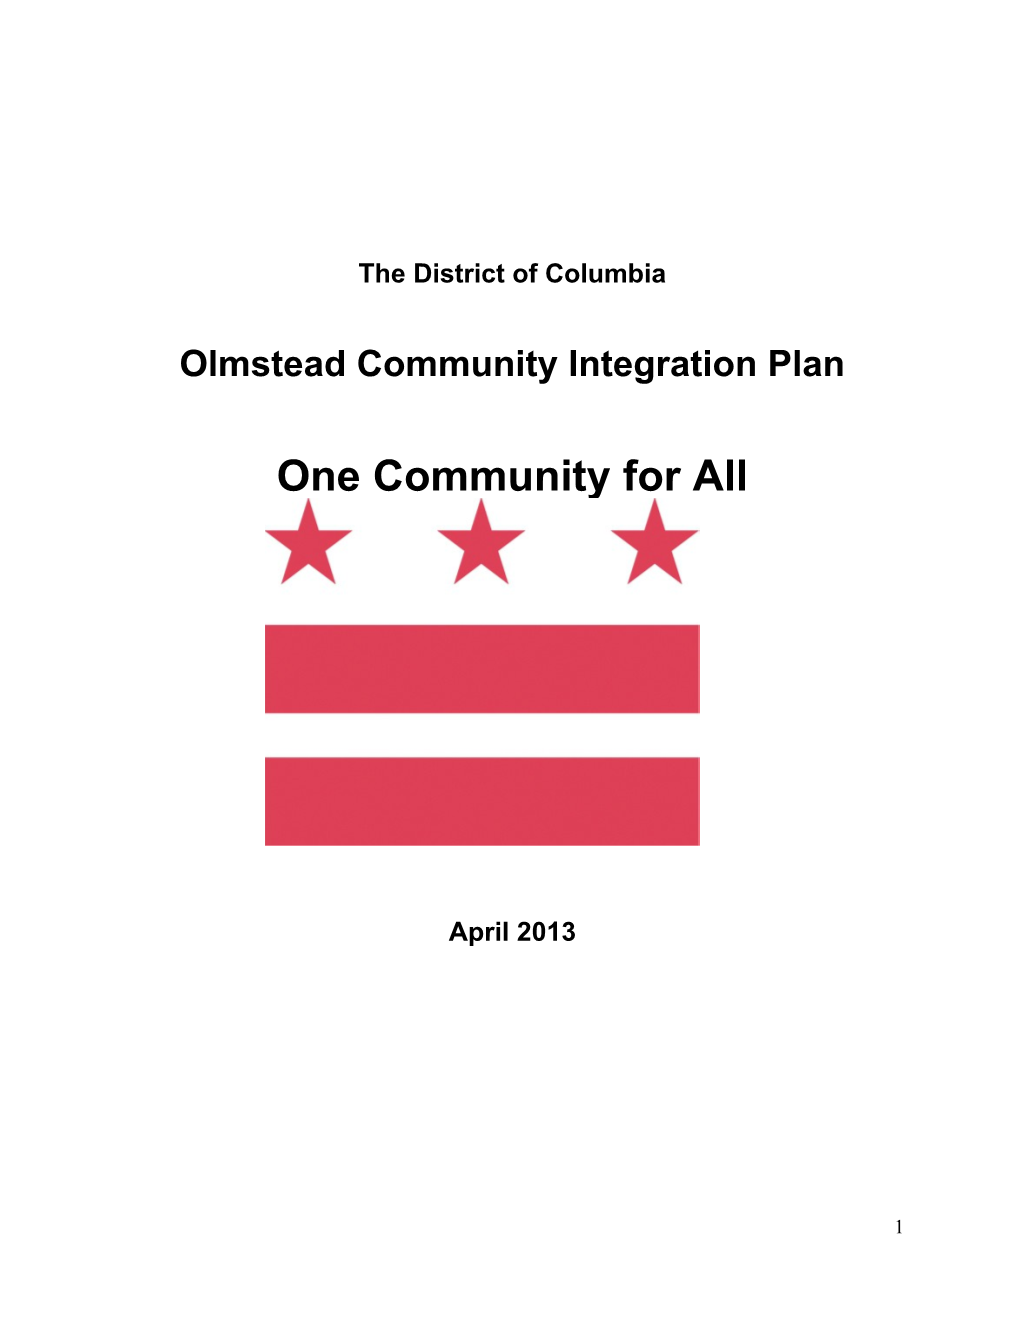 Olmstead Community Integration Plan